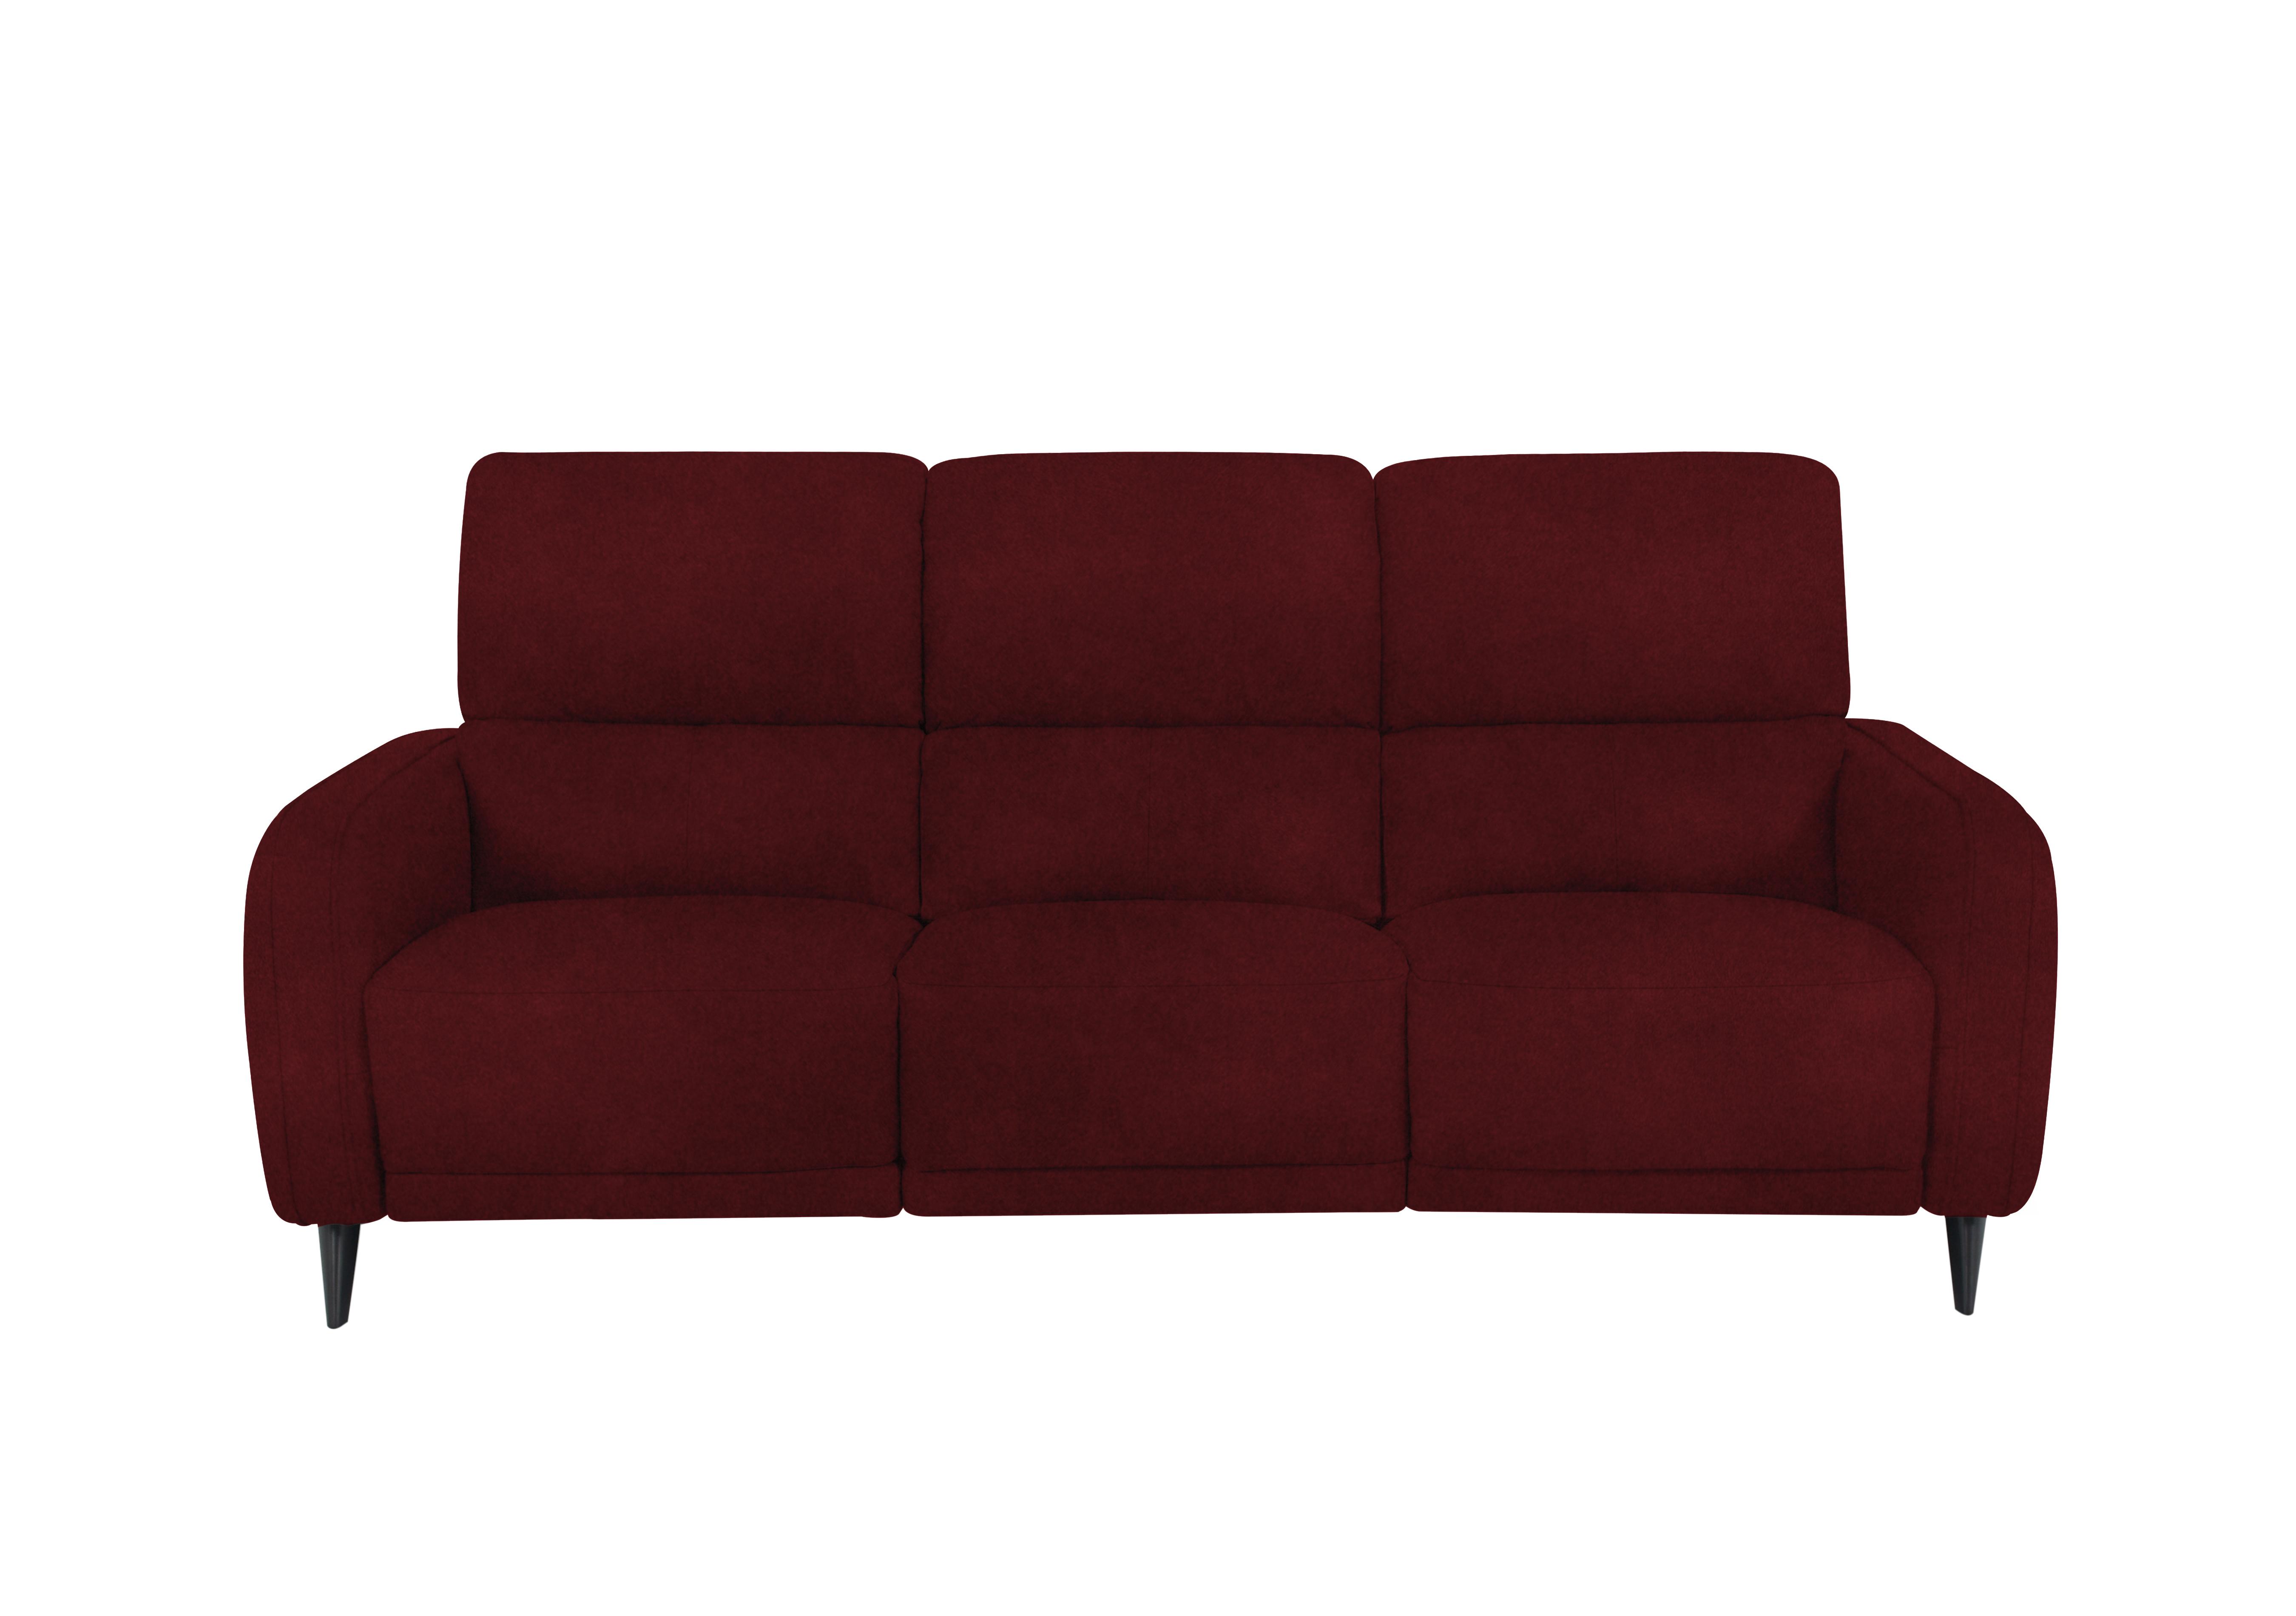 Logan 3 Seater Fabric Sofa in Fab-Meg-R65 Burgundy on Furniture Village